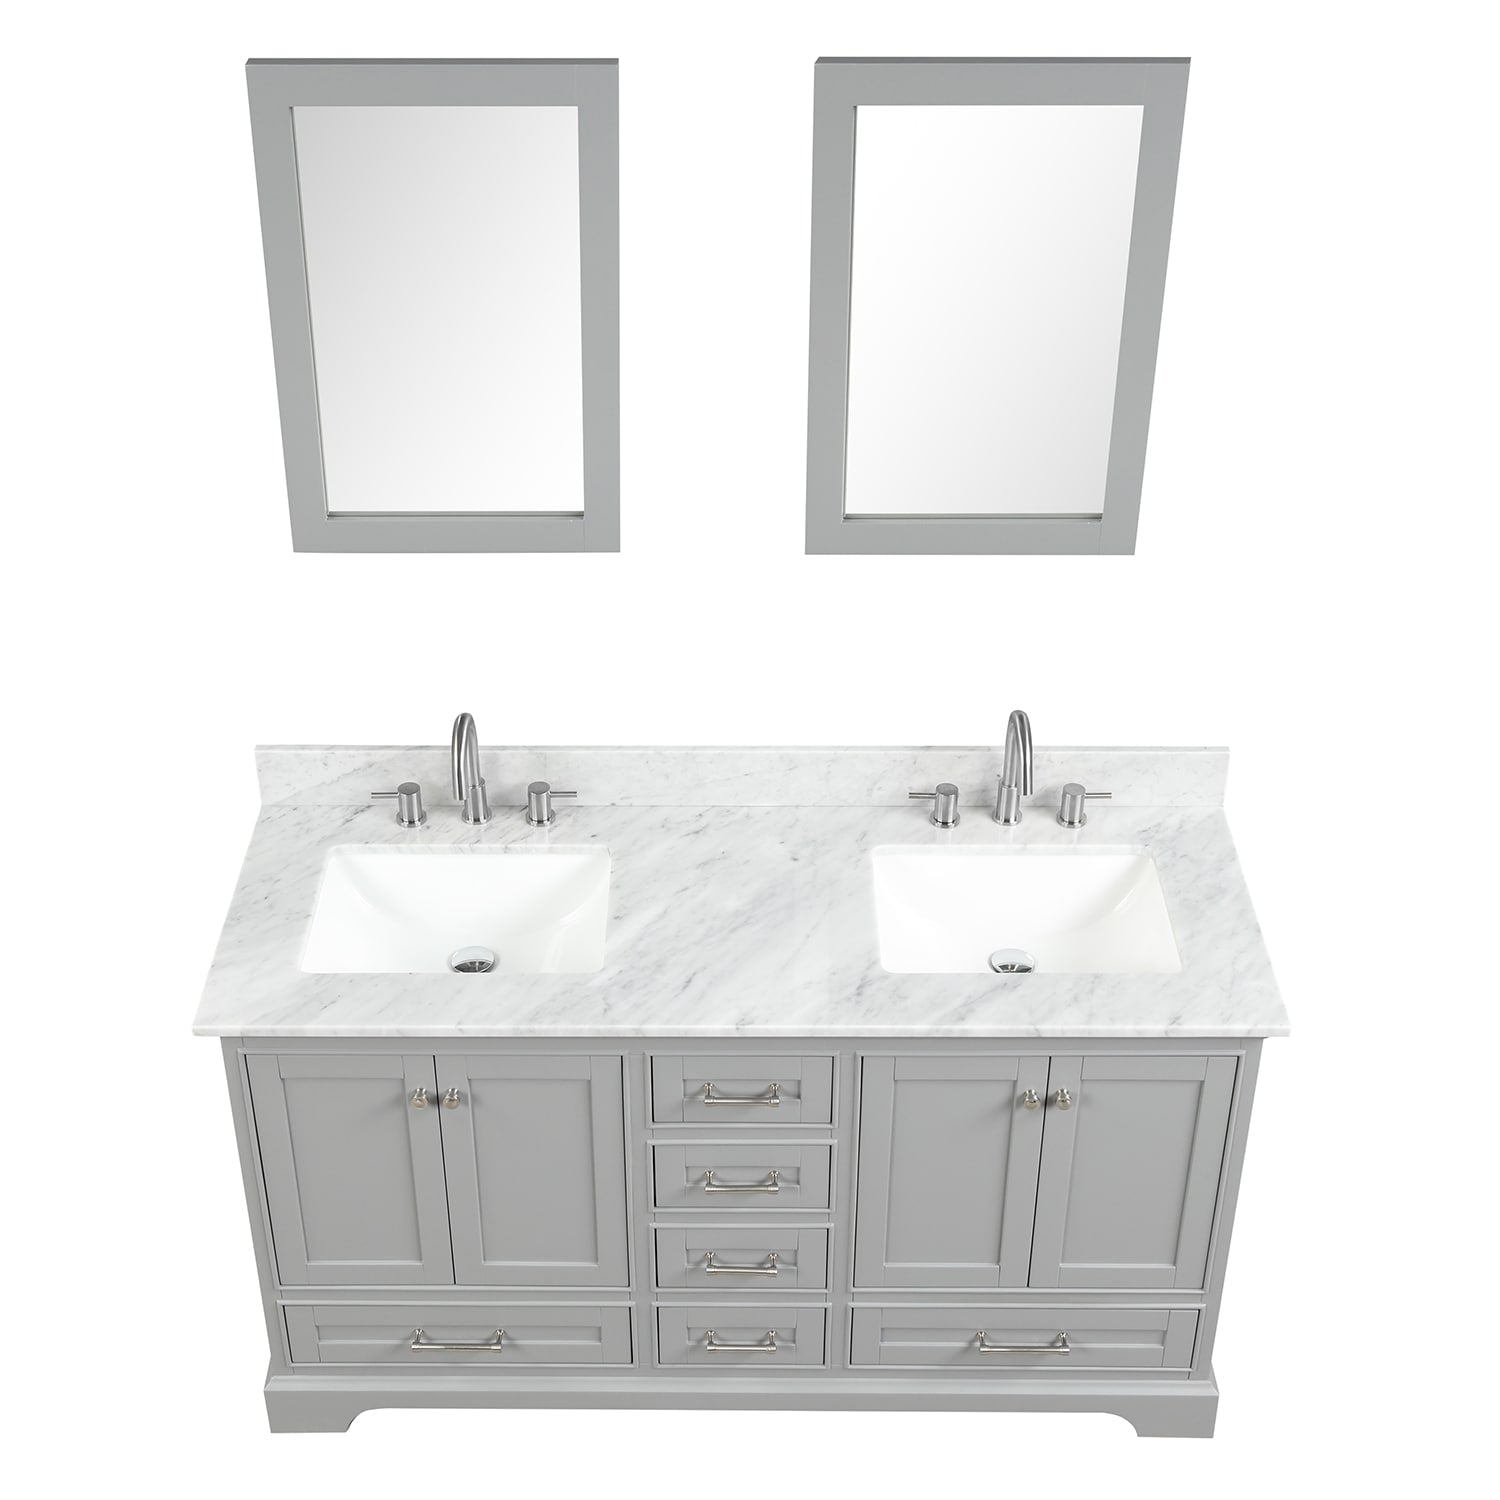 Copenhagen 60″ Bathroom Vanity with Marble Countertop Double Sink - Contemporary Bathroom Vanity